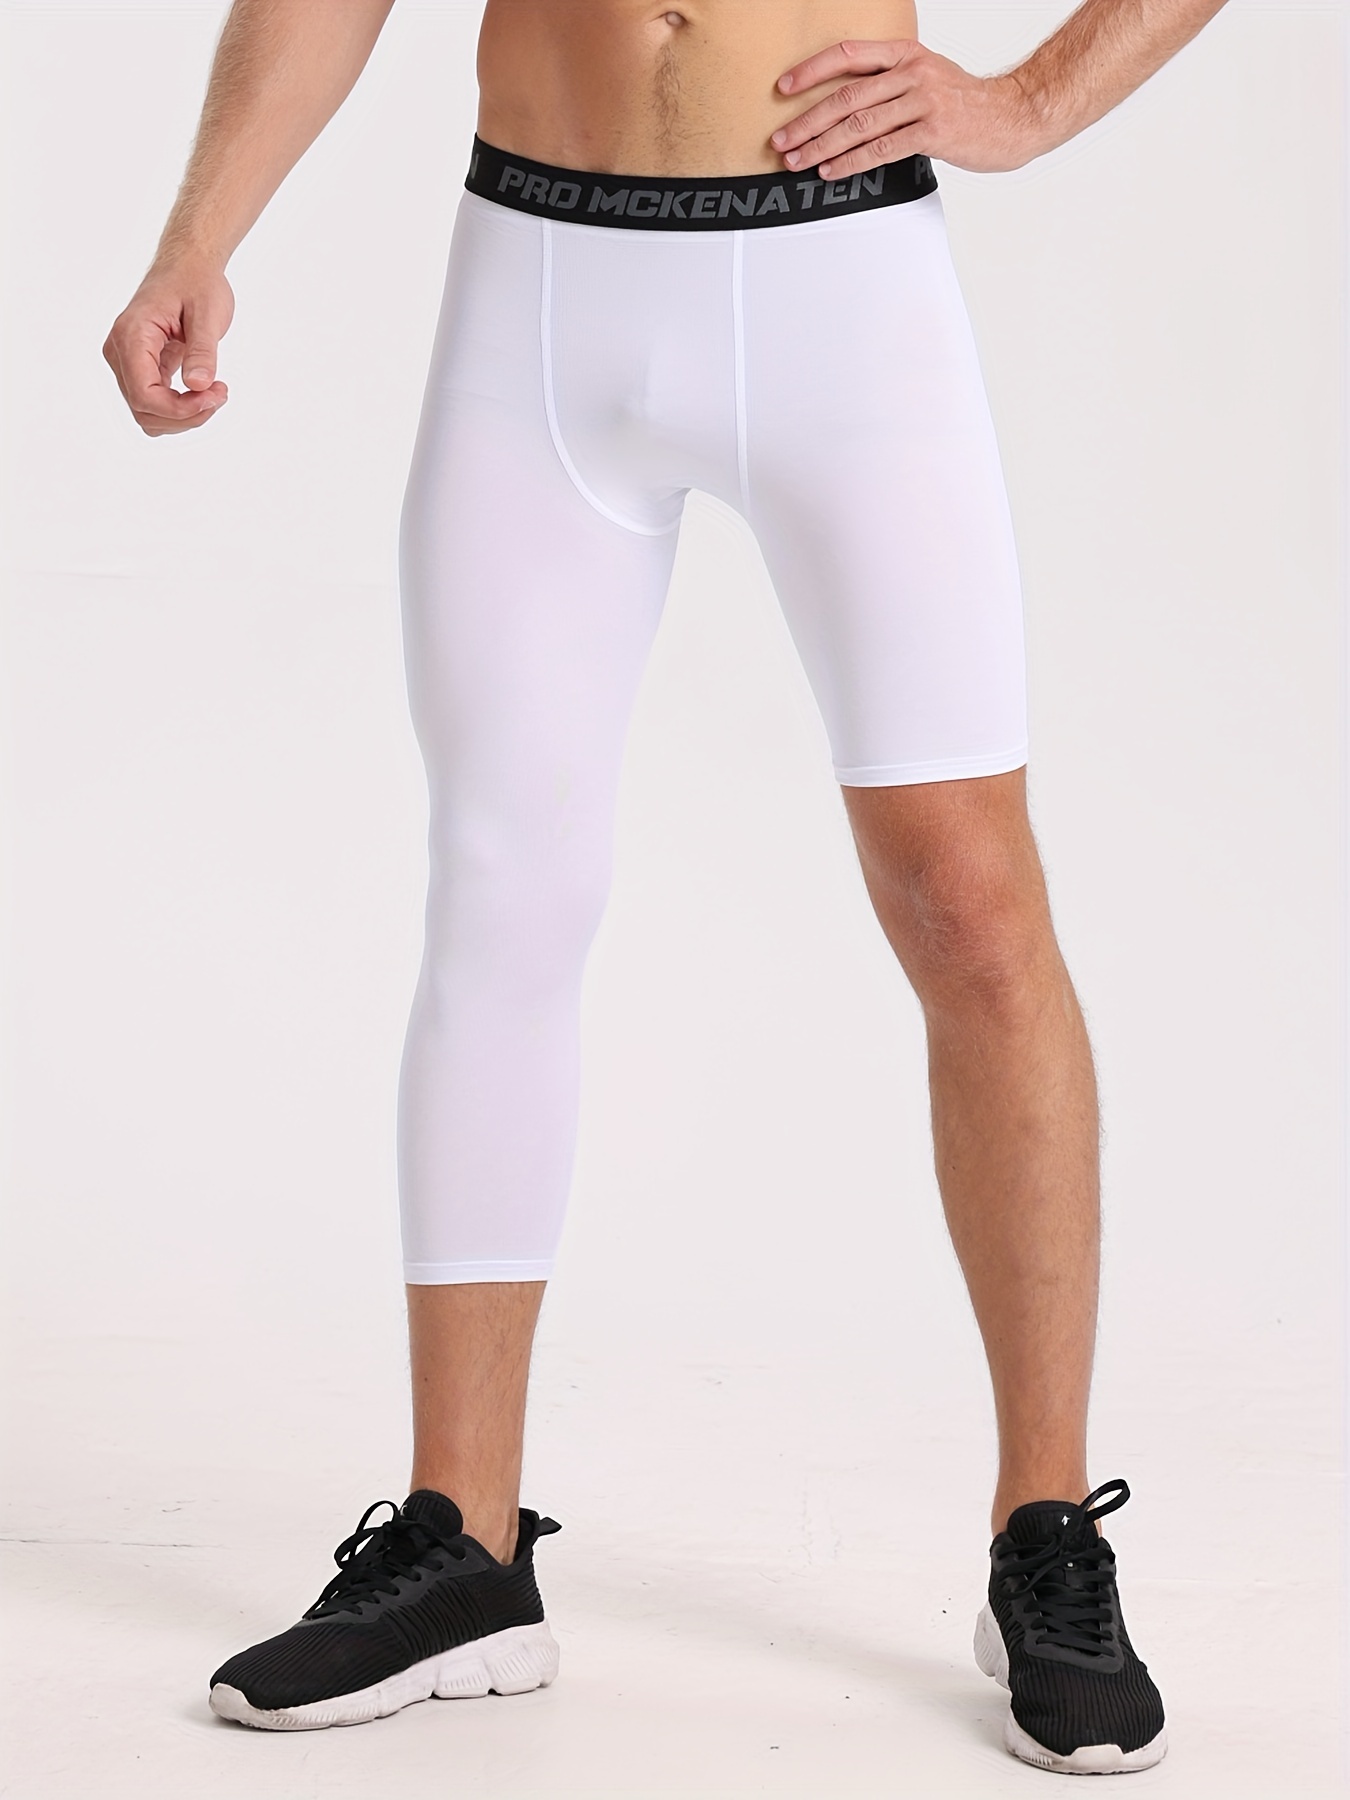 Men Gym Compression Leggings Base Layer Running Tight Pants 3/4